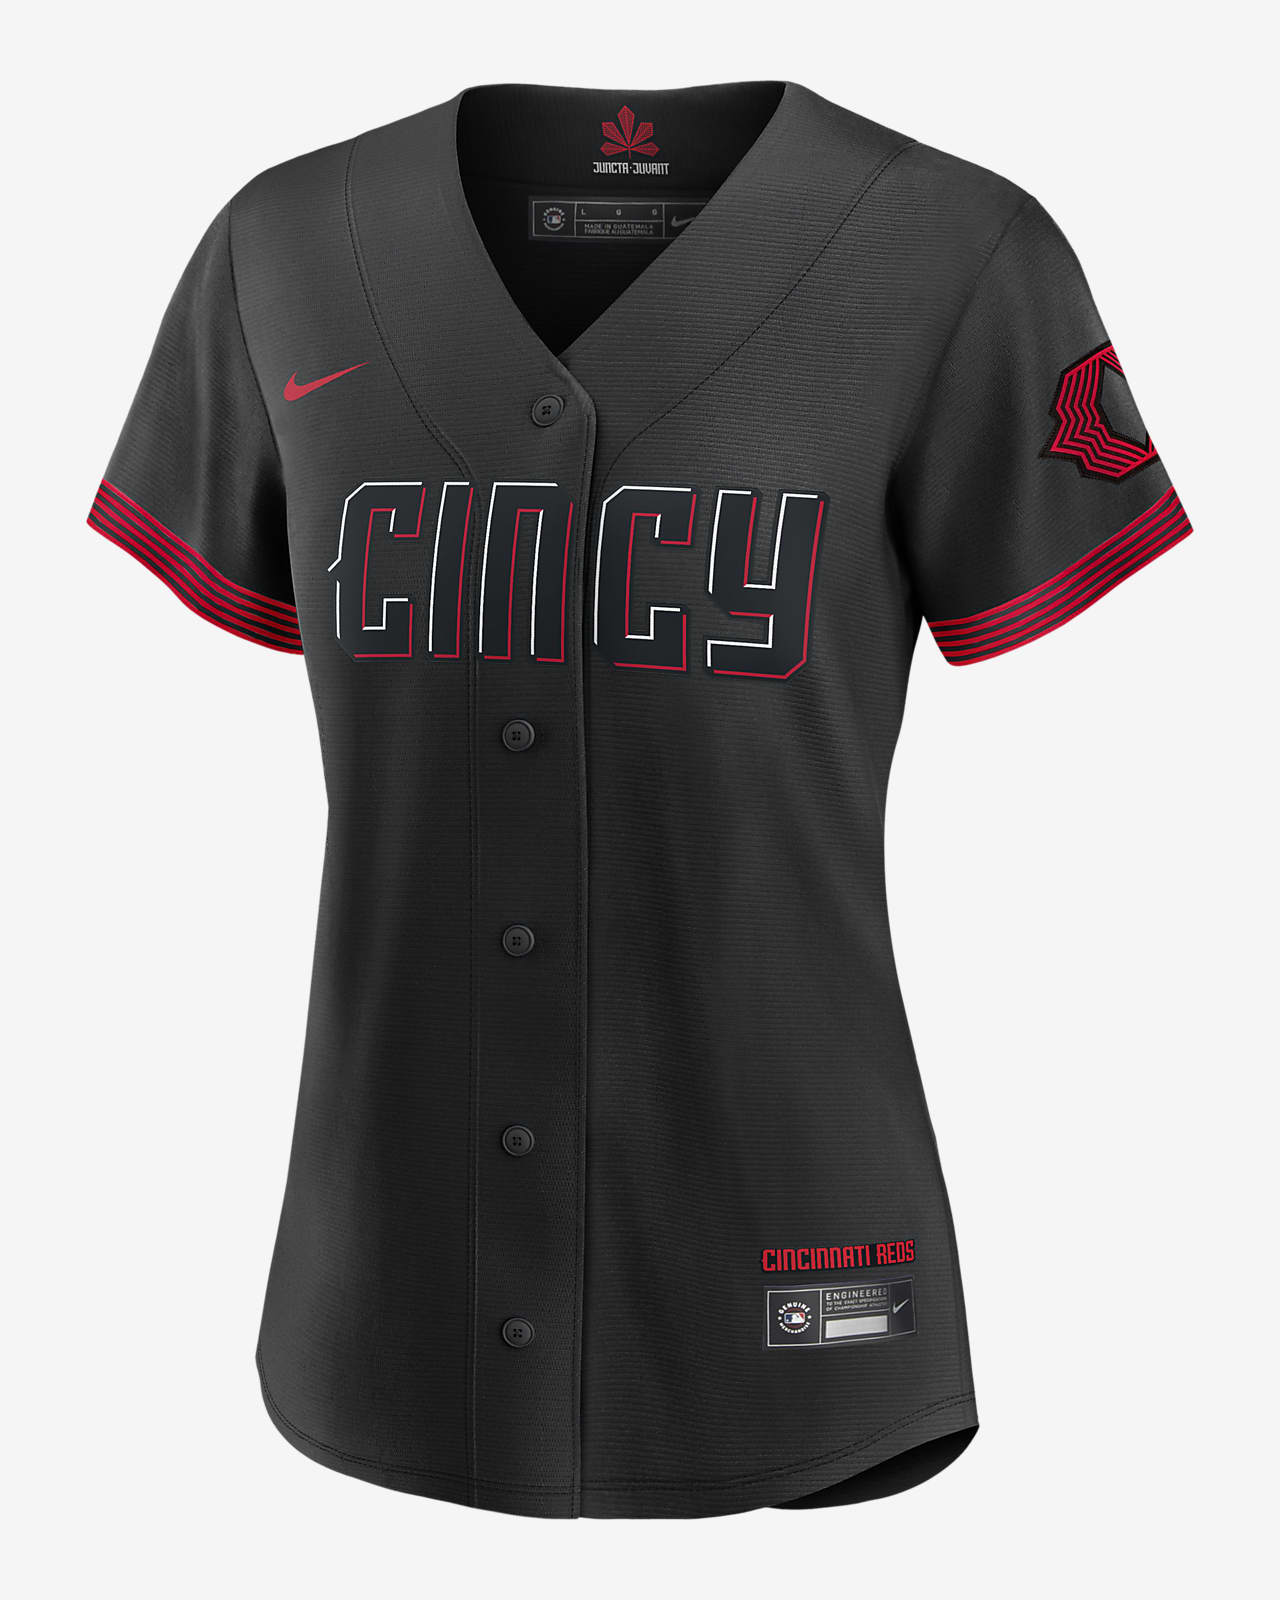 MLB Cincinnati Reds City Connect (Joey Votto) Women's Replica Baseball Jersey